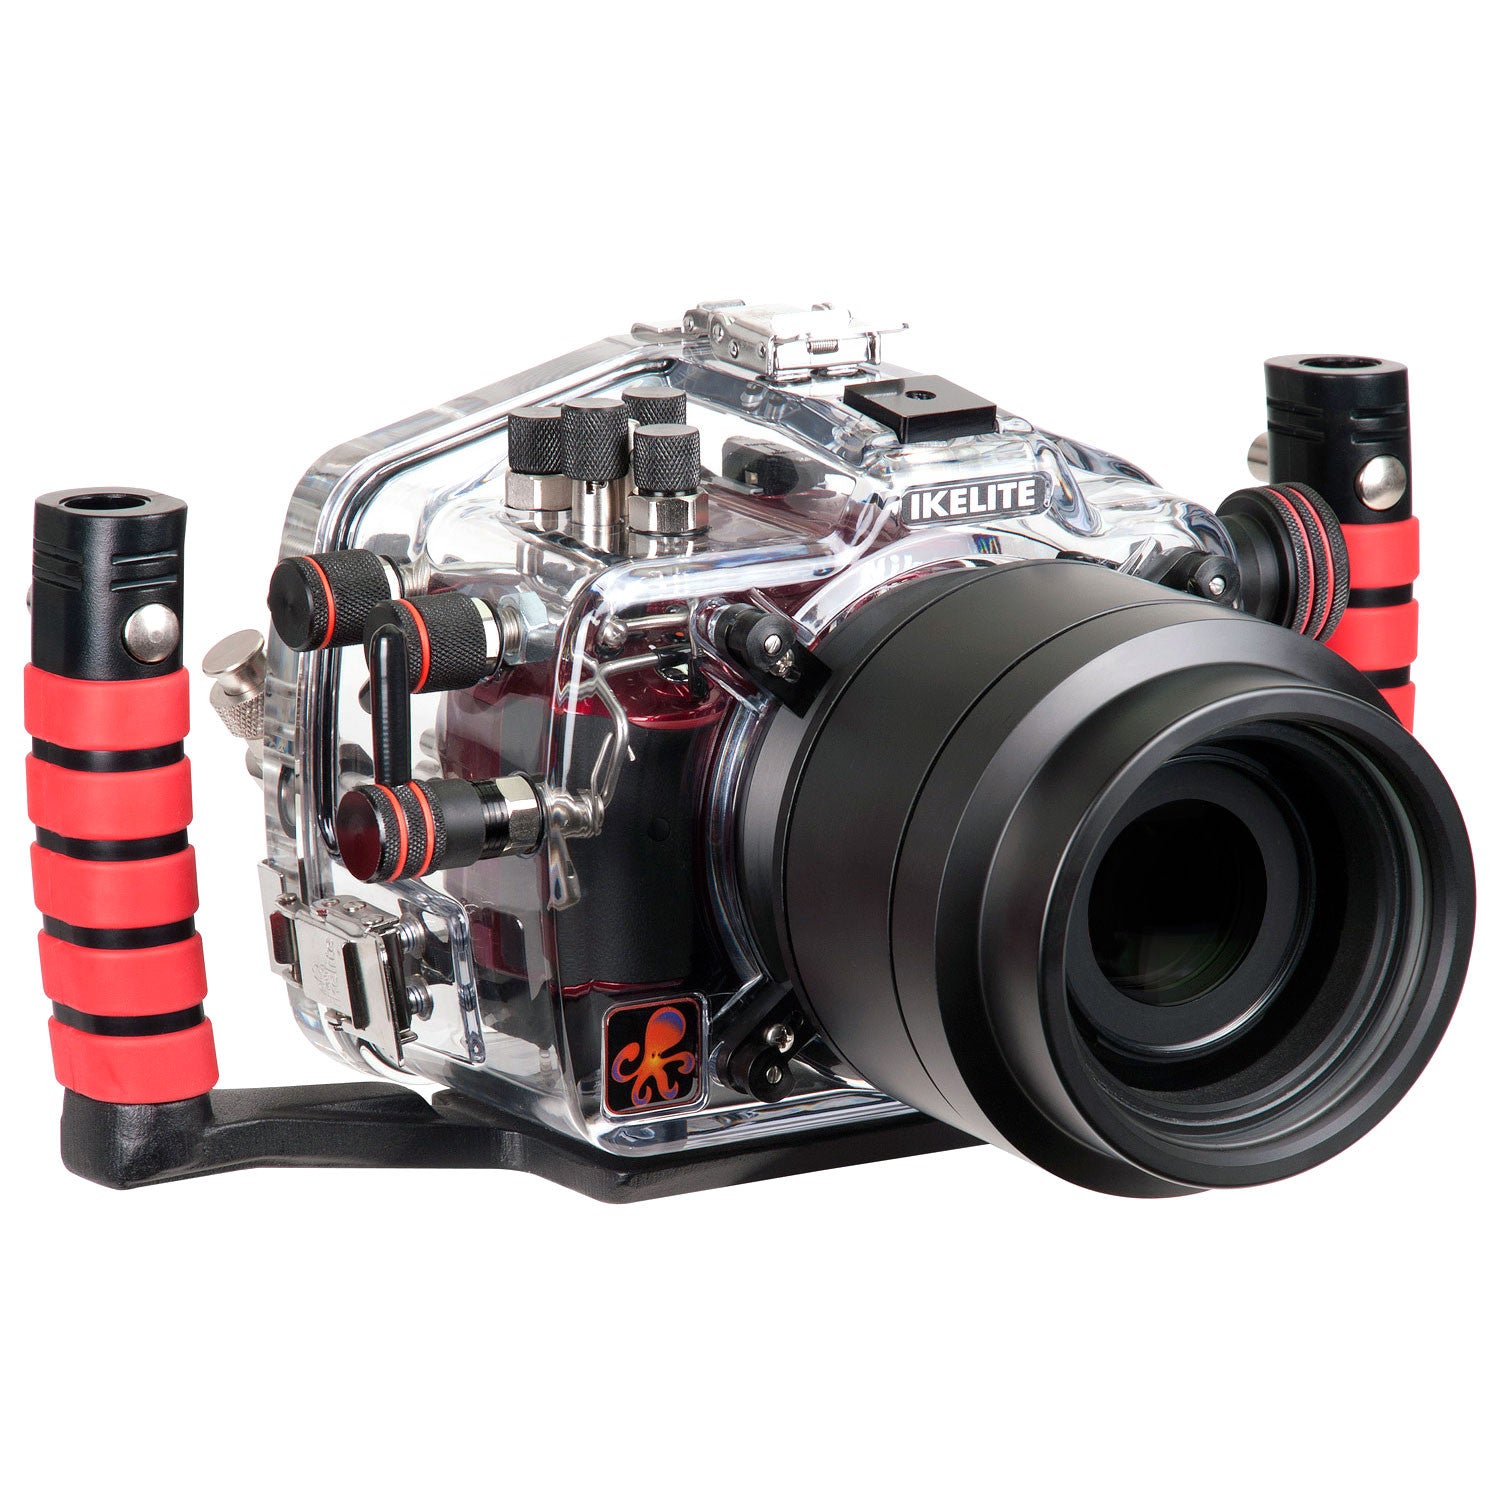 200FL Underwater TTL Housing for Nikon D5300 DSLR Cameras